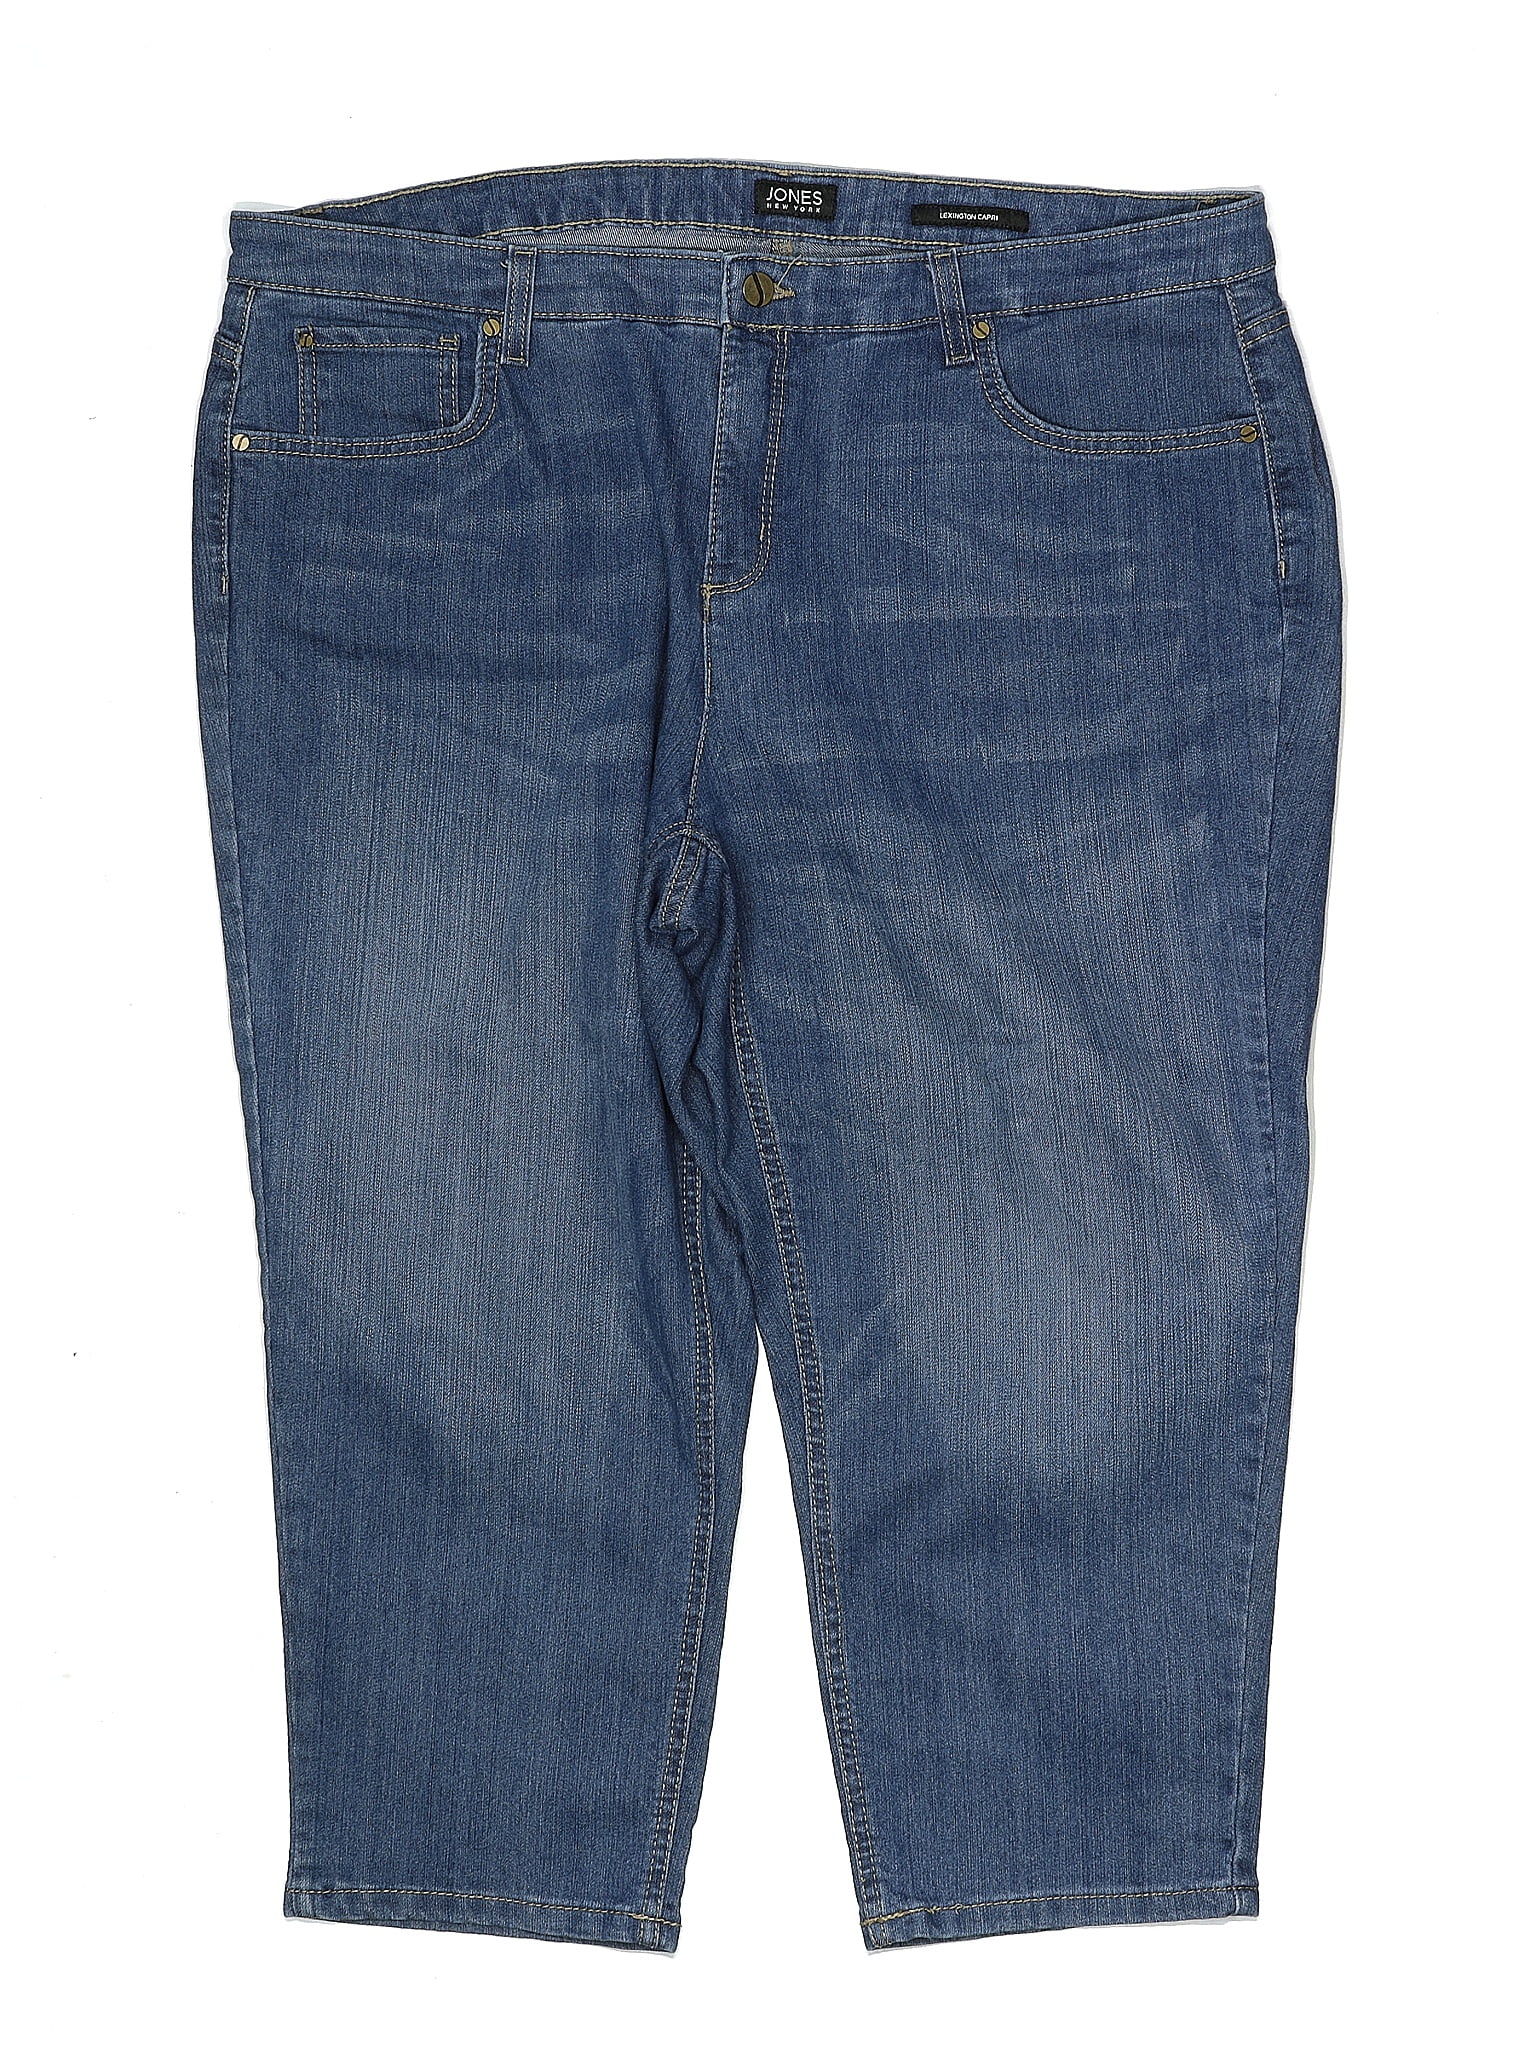 Terra & Sky Solid Blue Jeans Size 18 (Plus) - 32% off